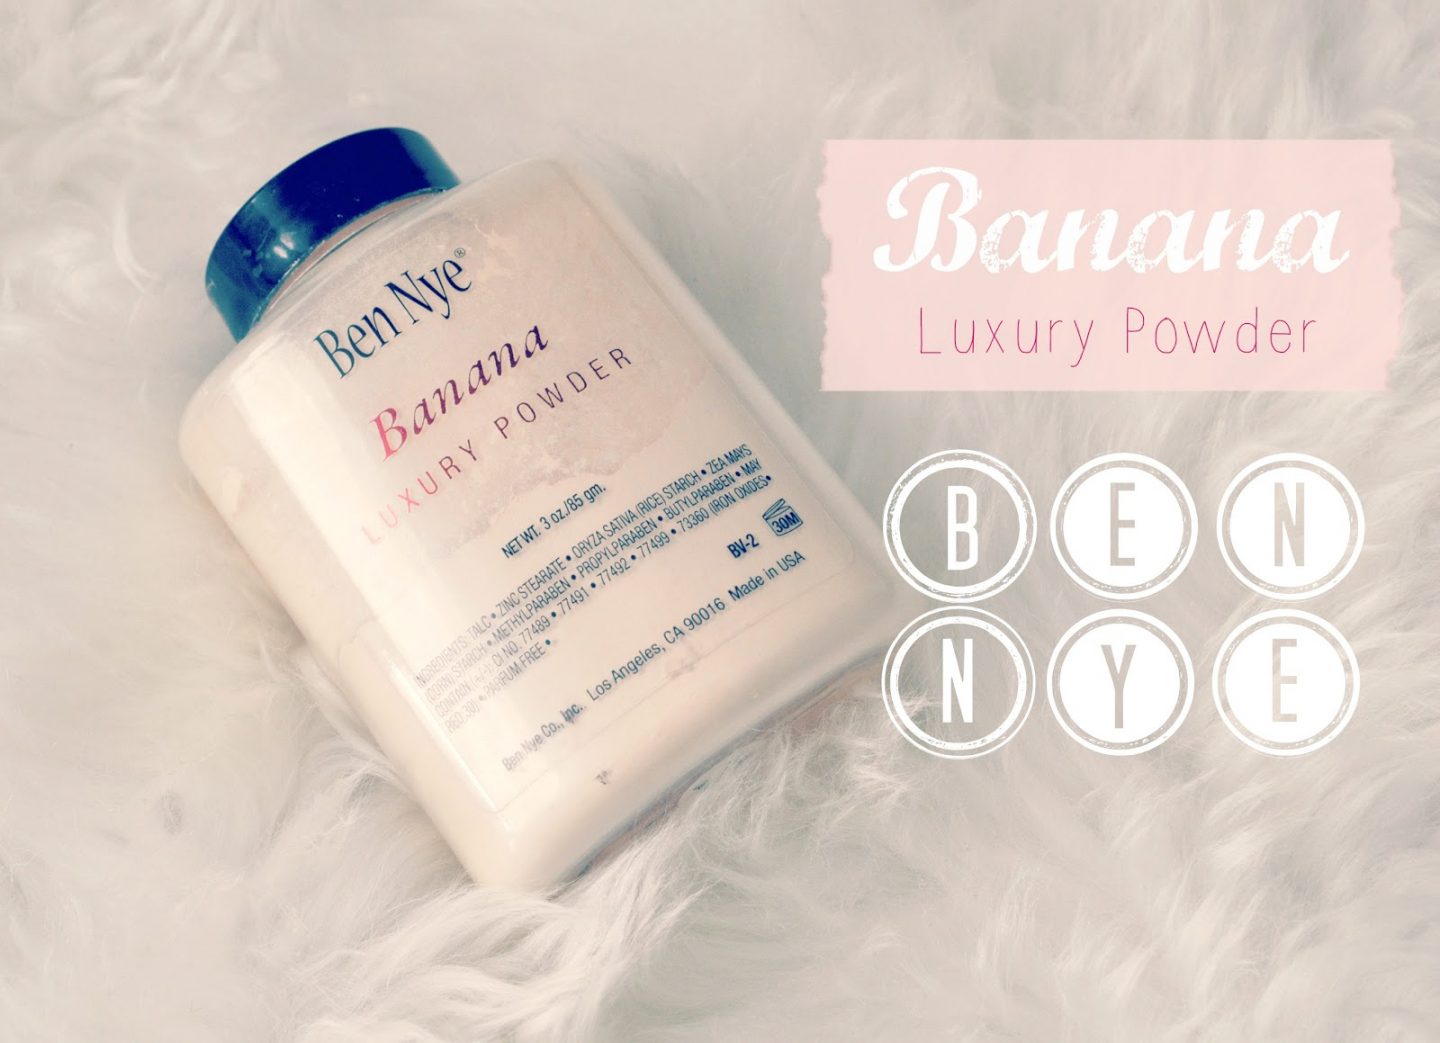 Banana luxury powder Ben Nye